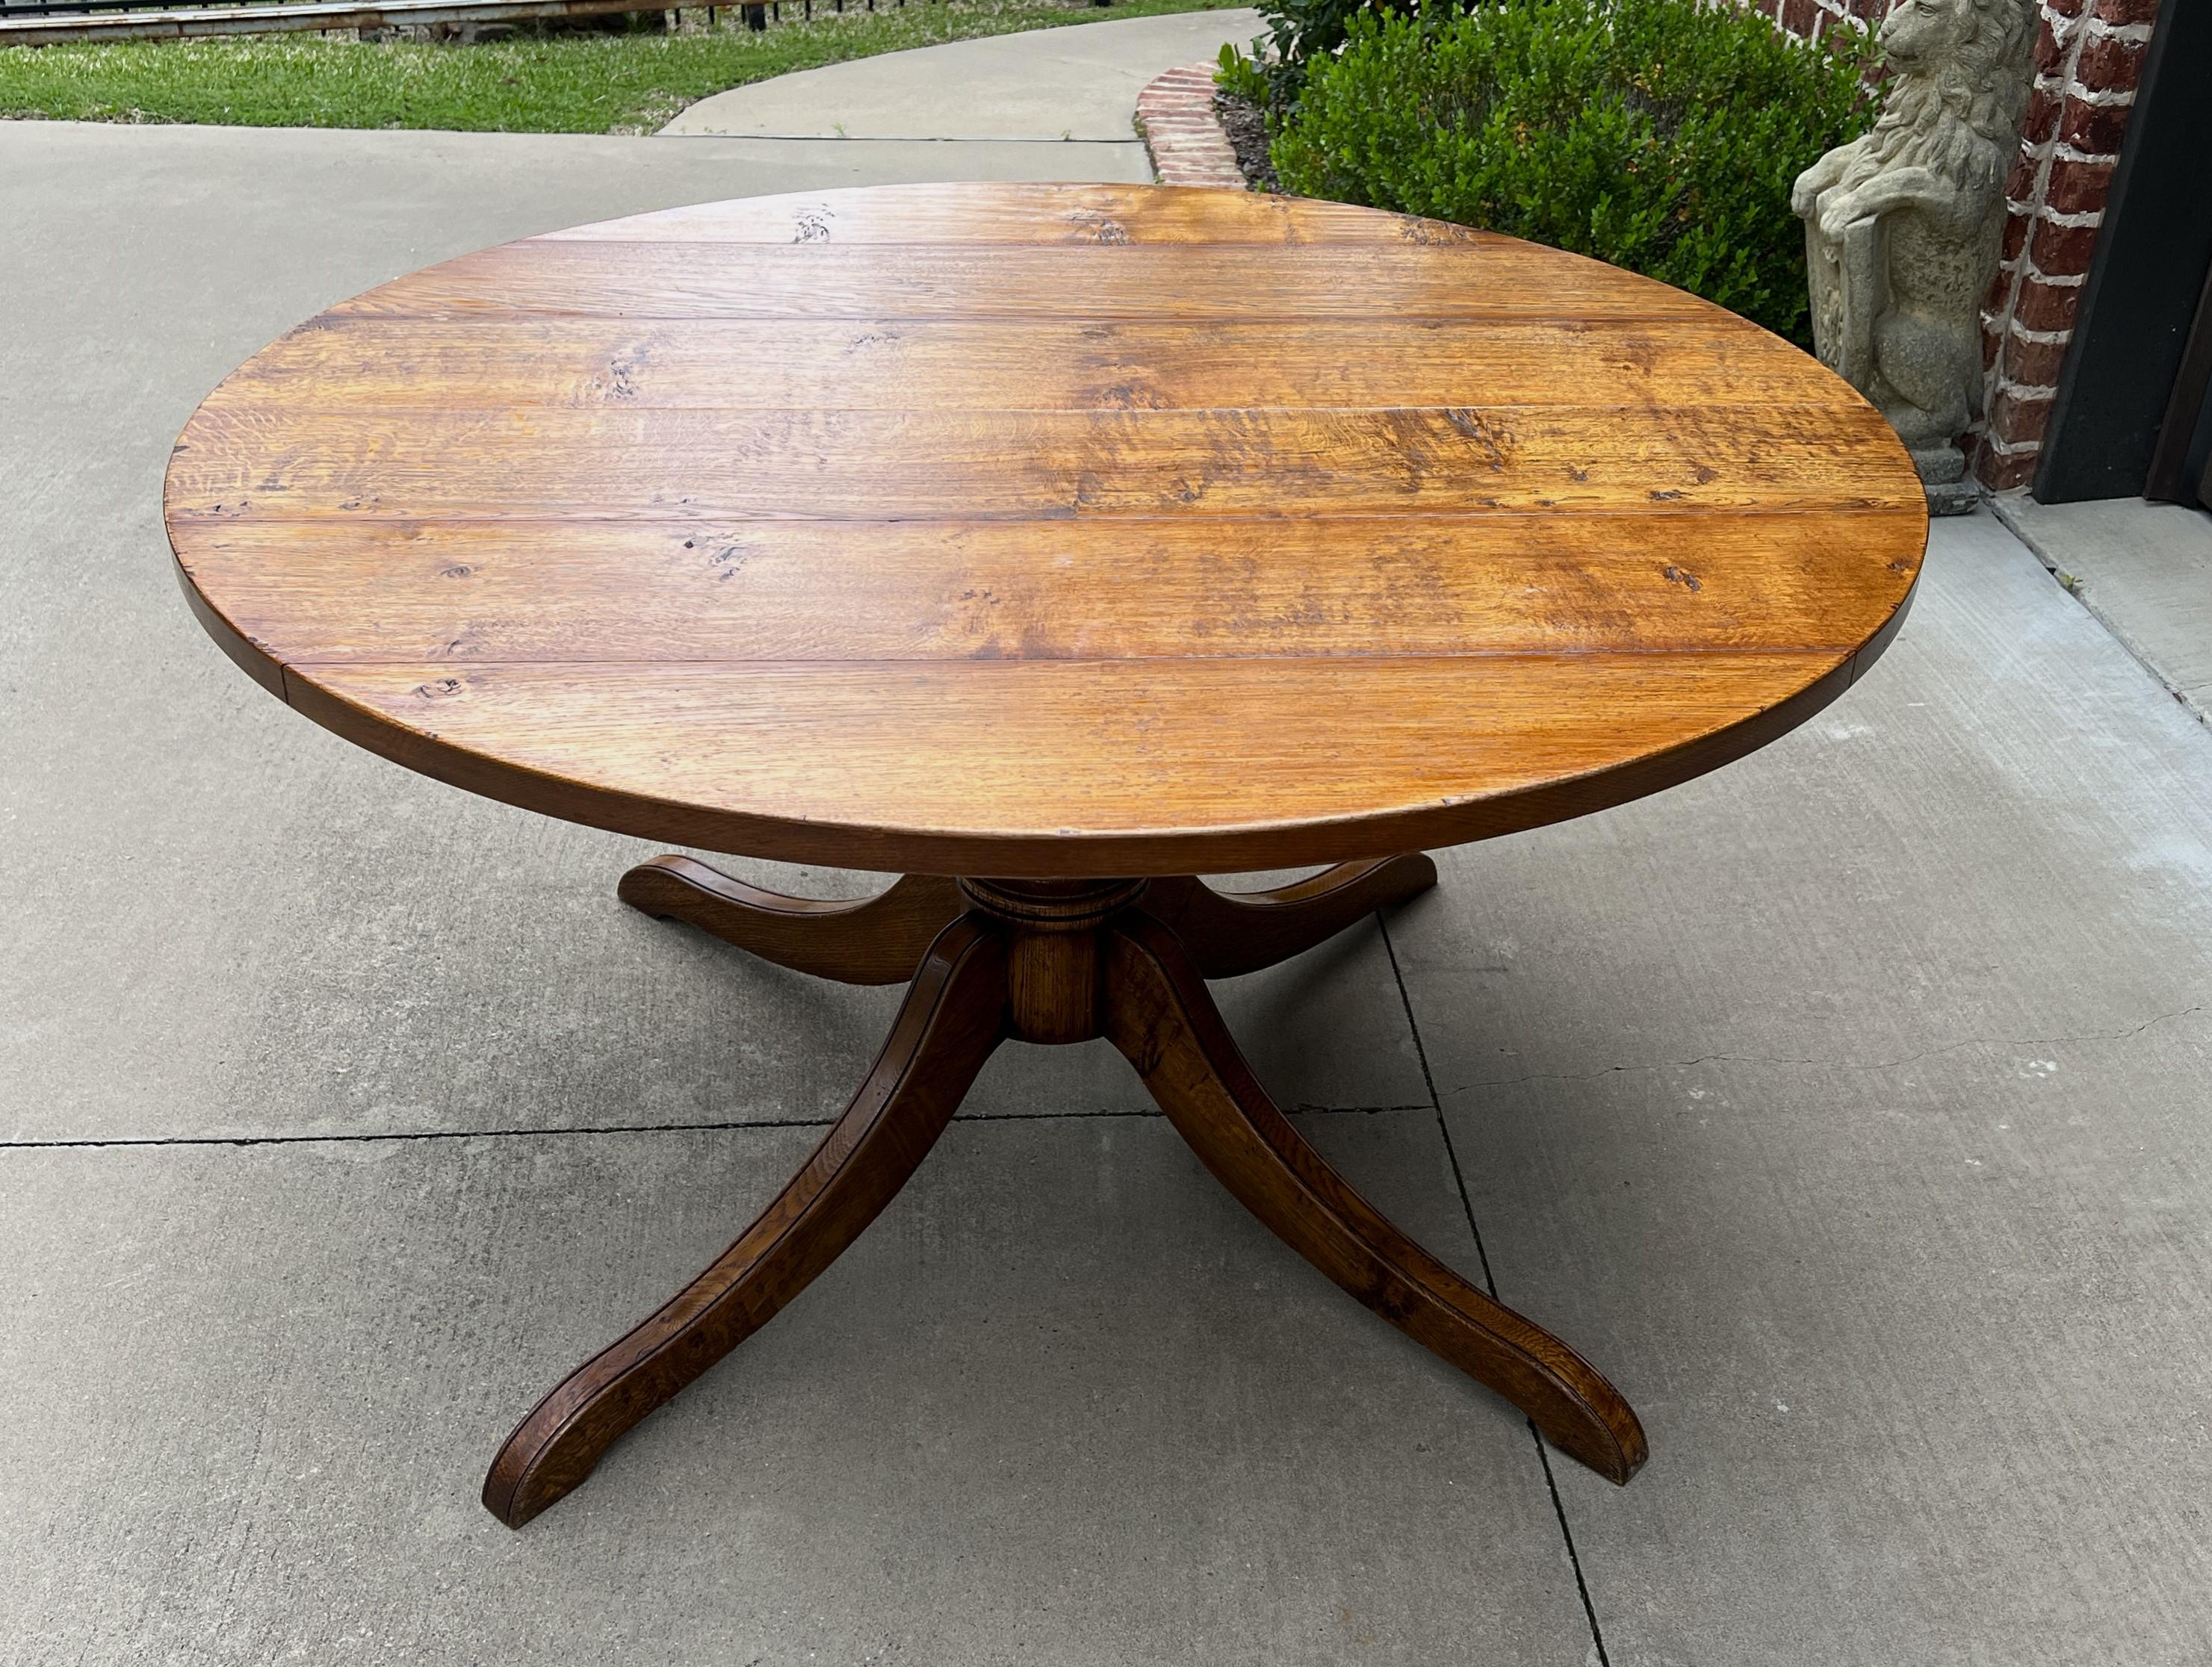 British Midcentury English Round/Oval Dining Table Pedestal Base with Leaf Oak, c. 1940s